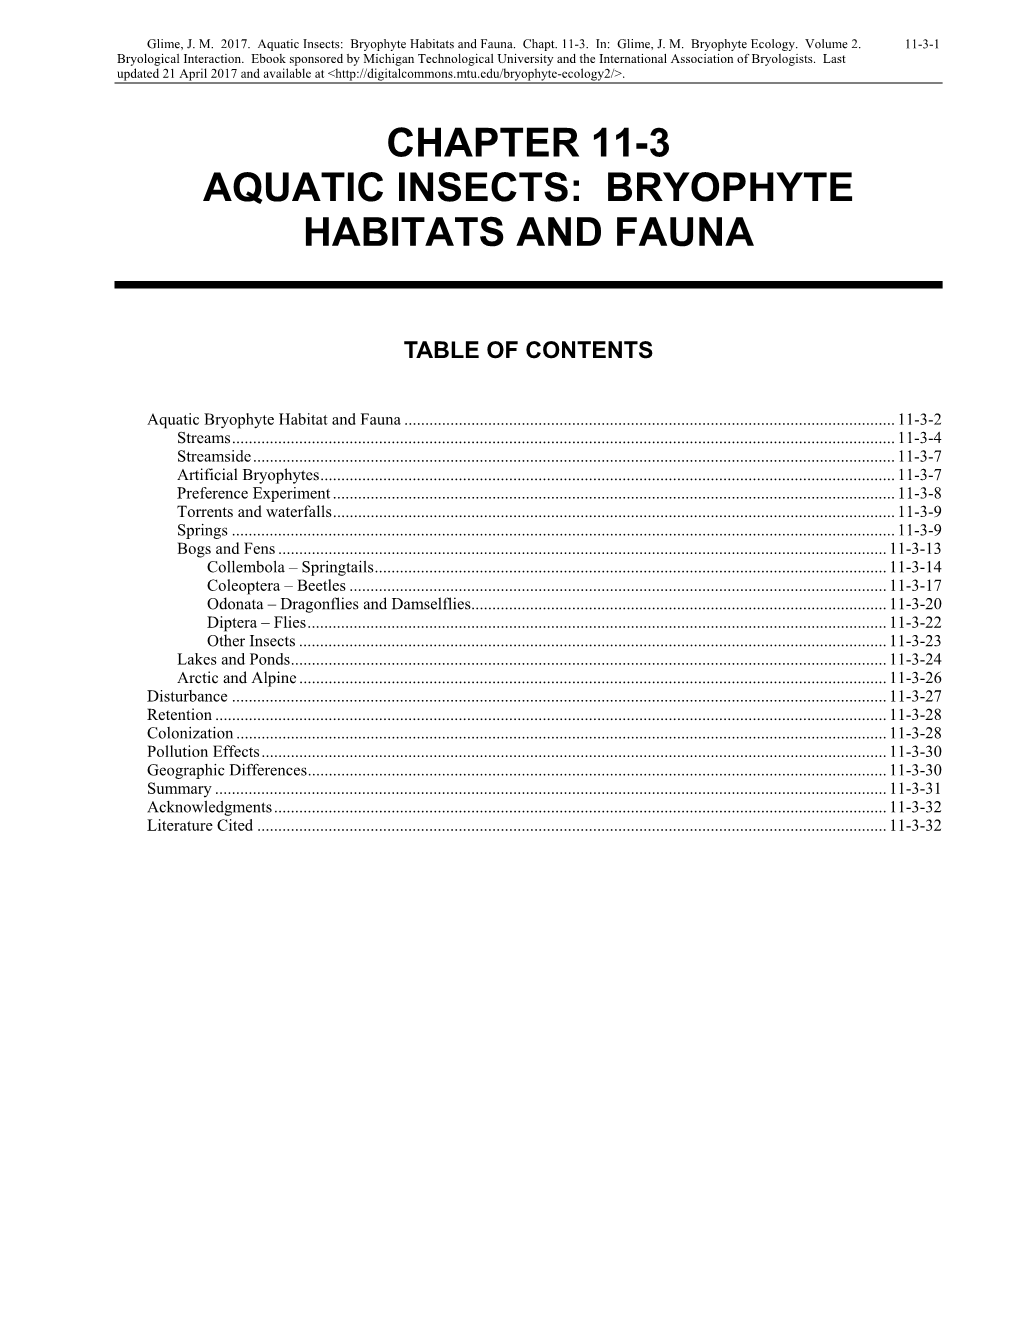 Aquatic Insects: Bryophyte Habitats and Fauna